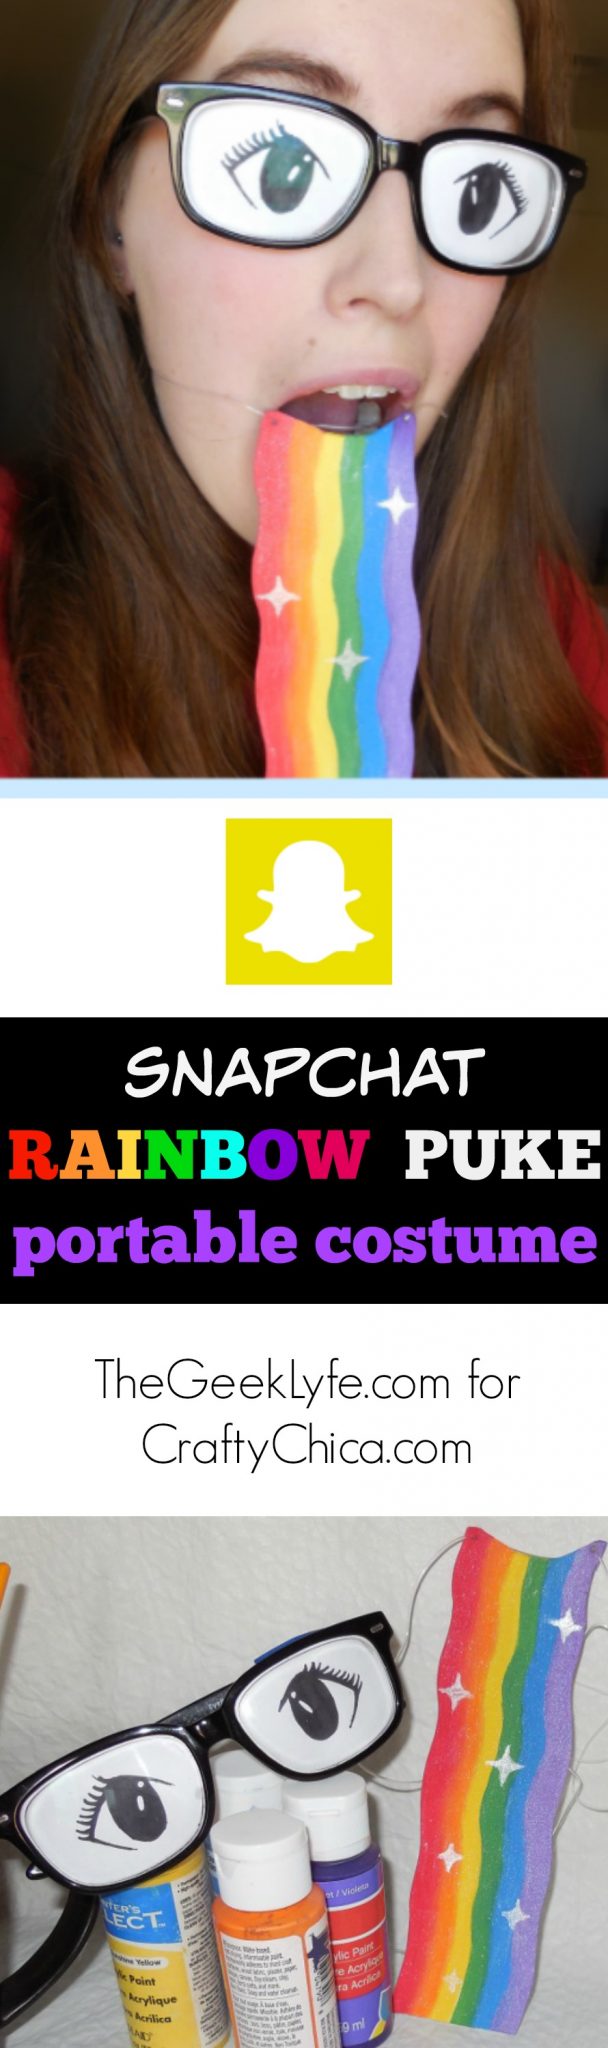 snapchat-rainbow-puke